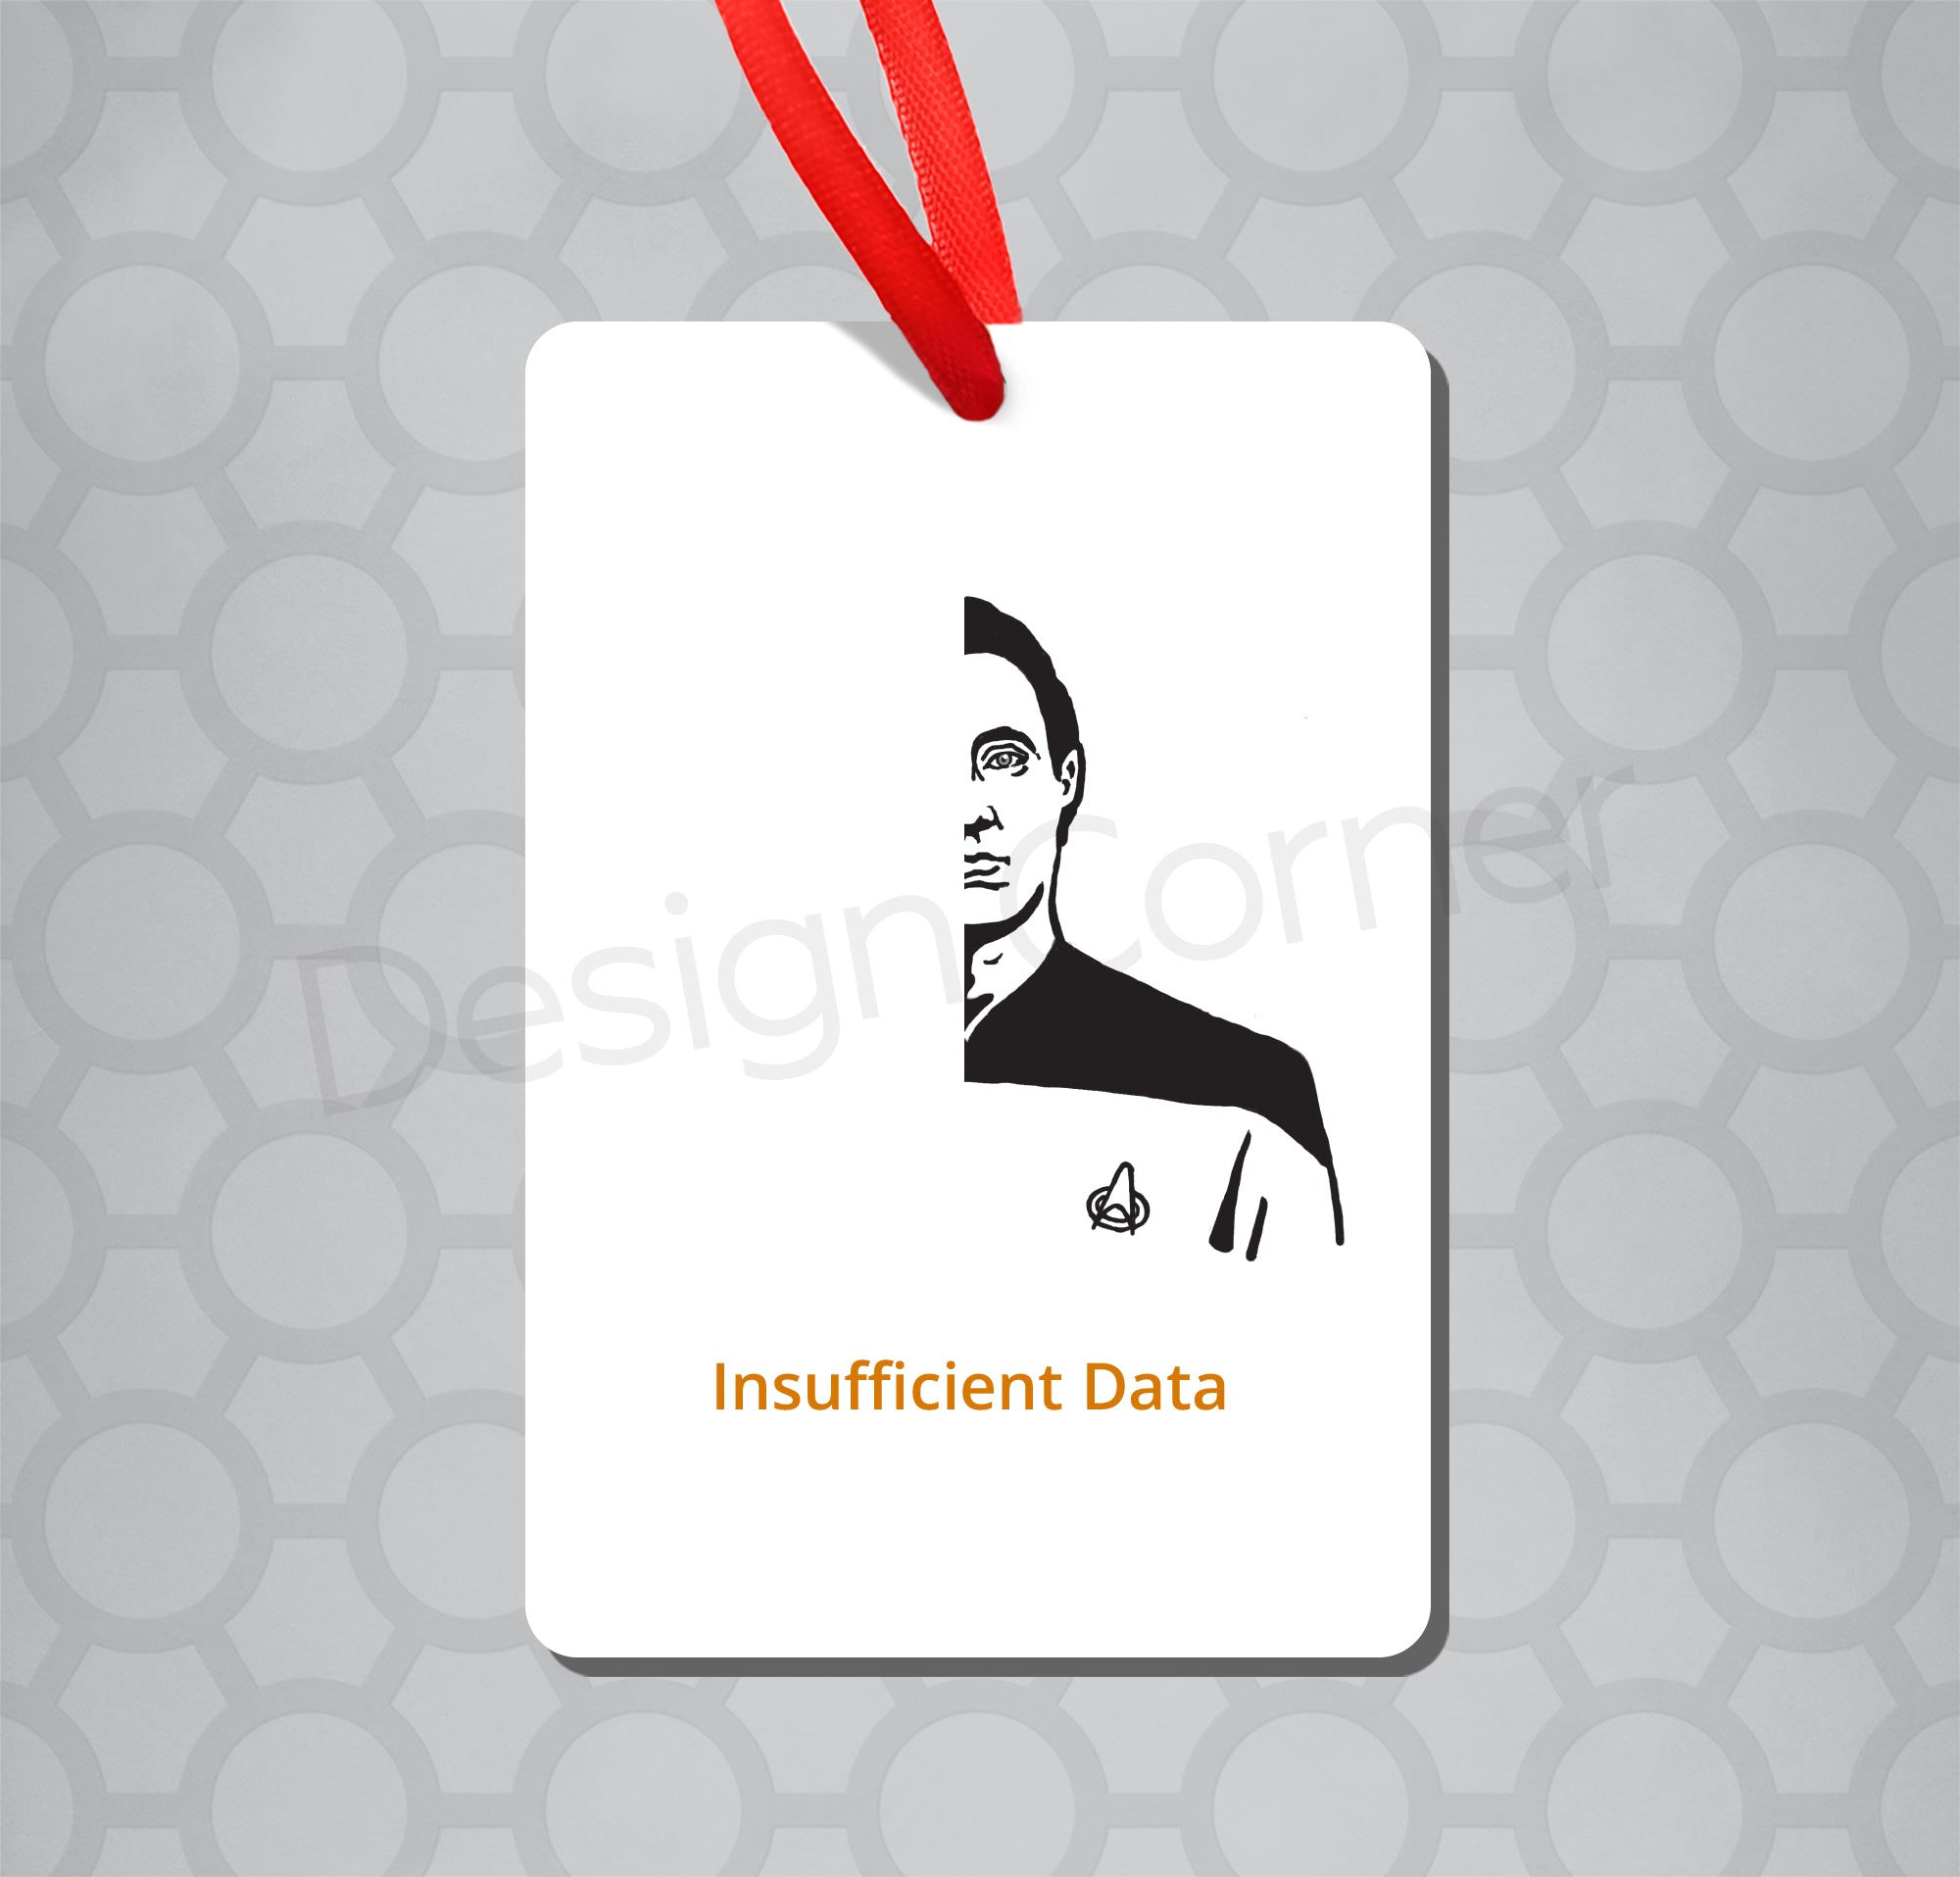 Illustration of Star Trek Data on magnet ornament with caption "Insufficient Data"